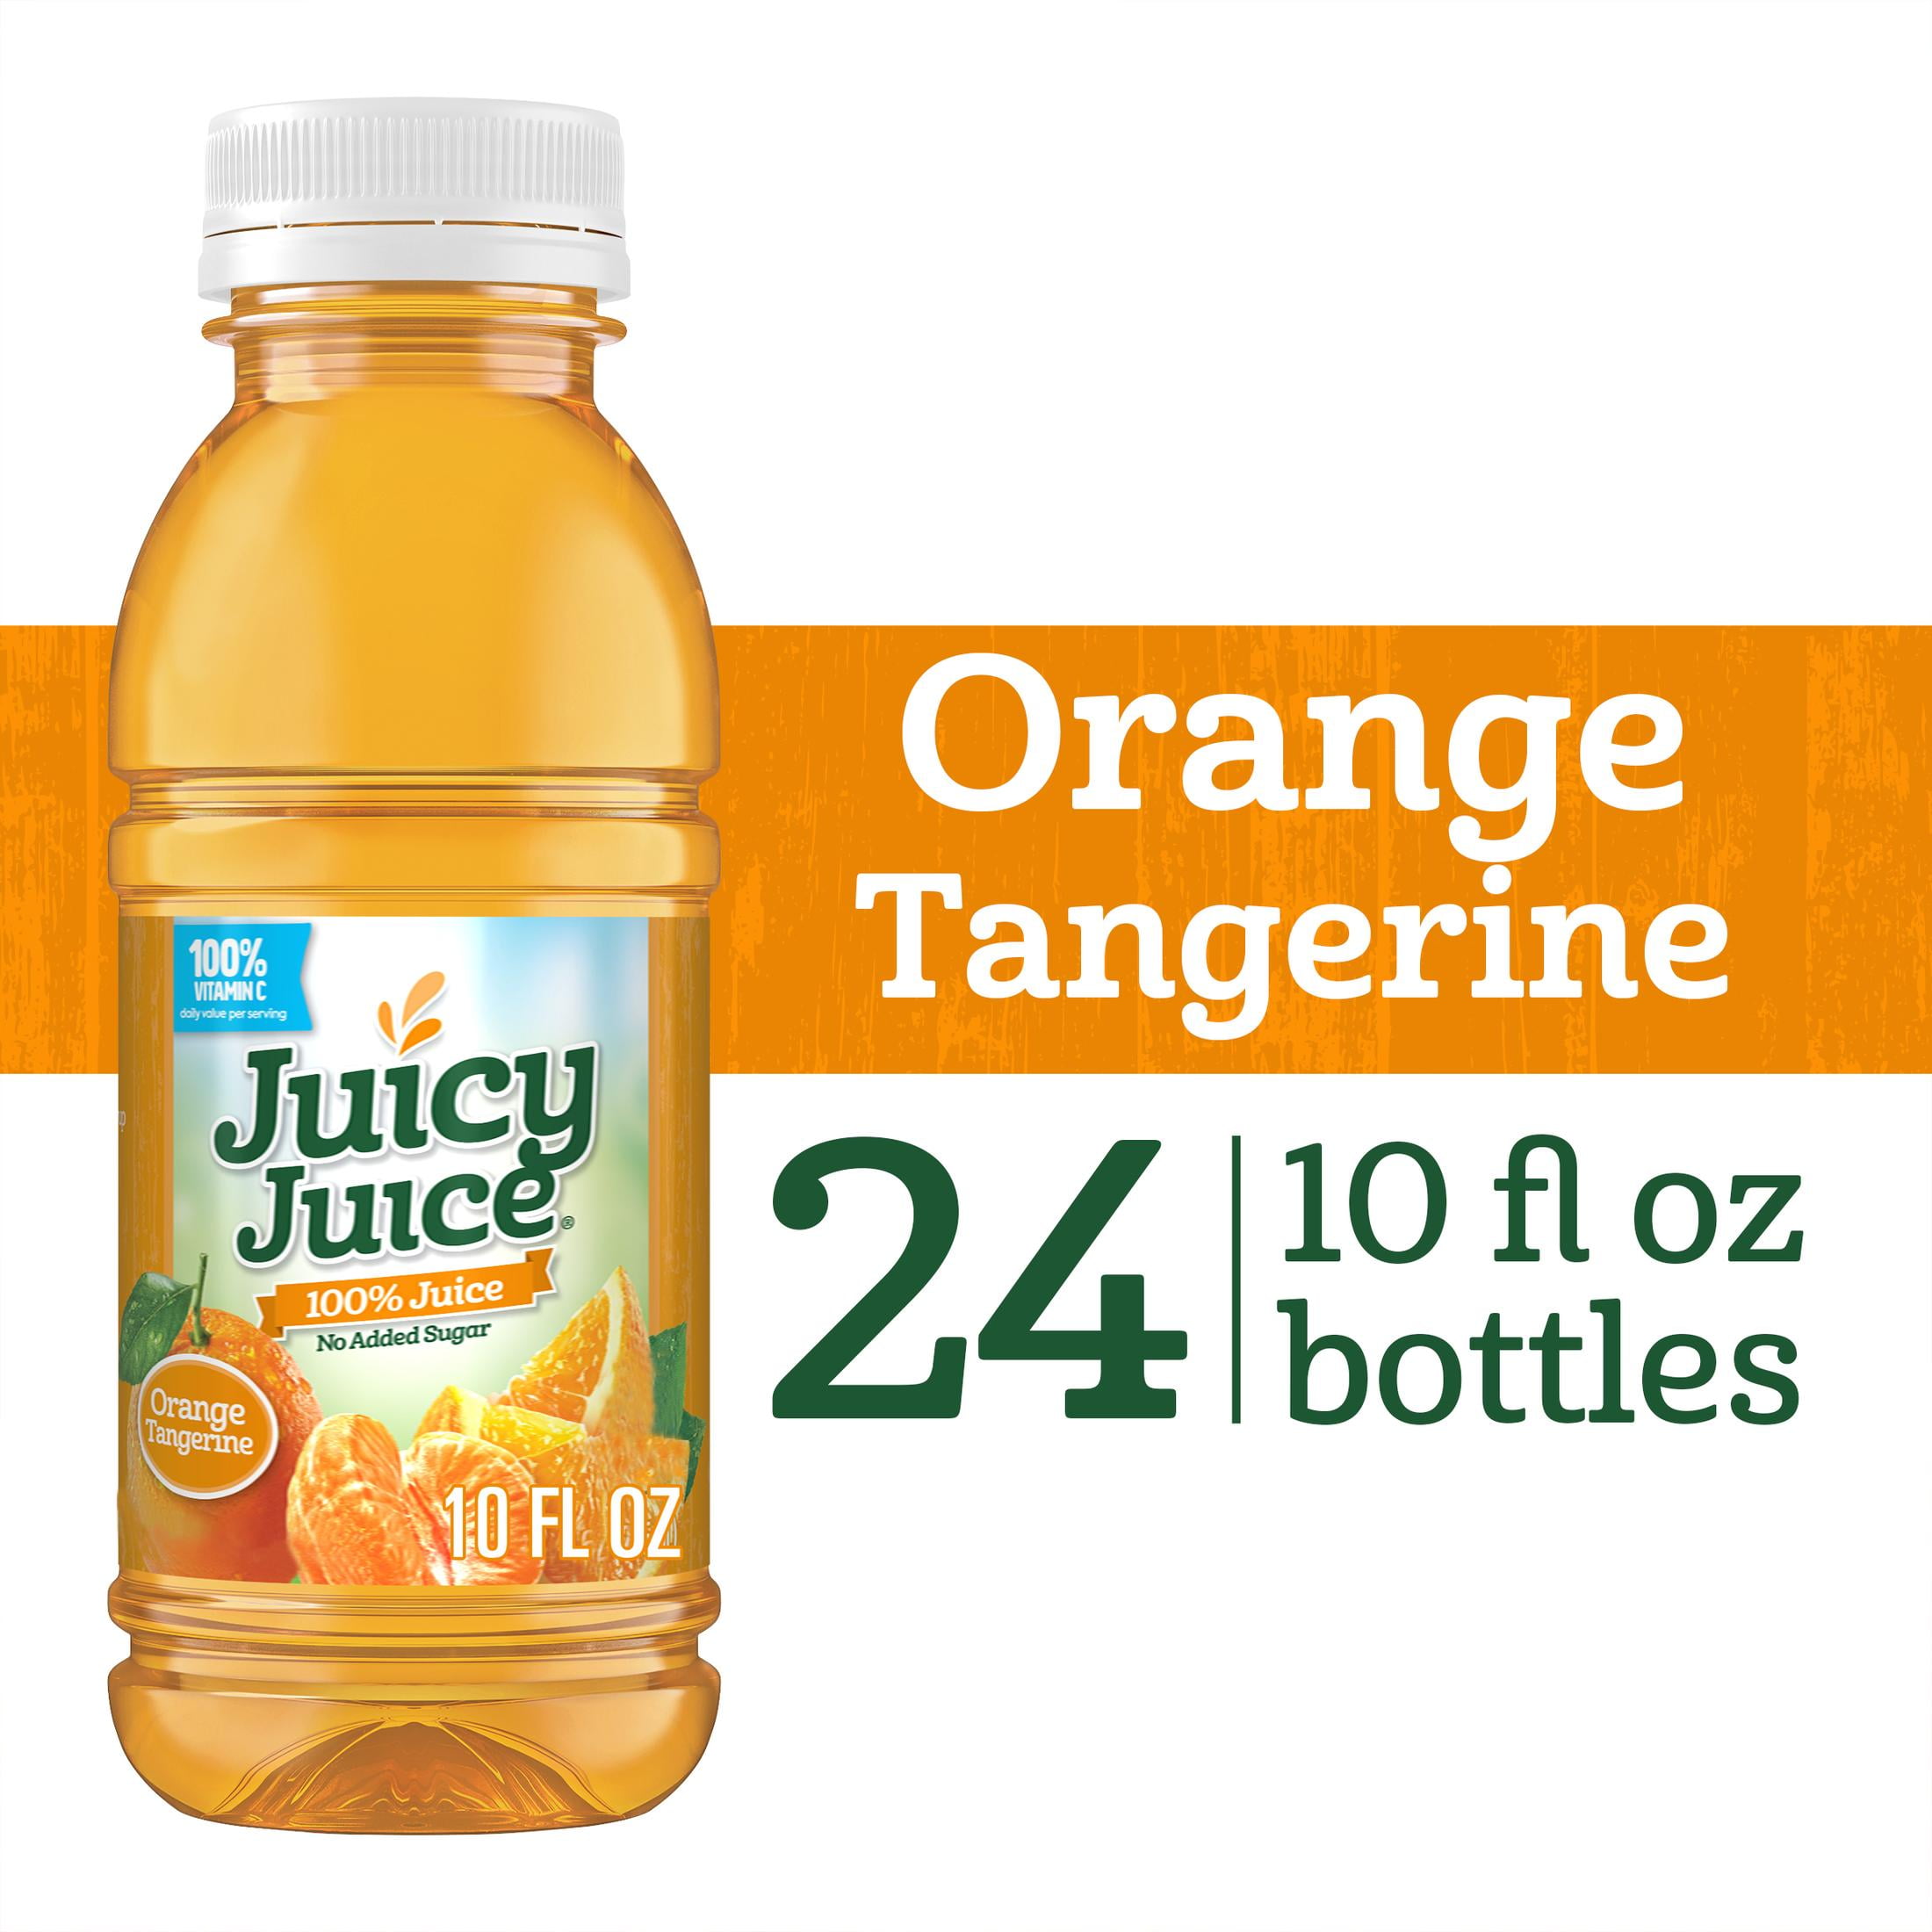 Bug Juice Outragous Orange, 10-Ounce (Pack of 24)